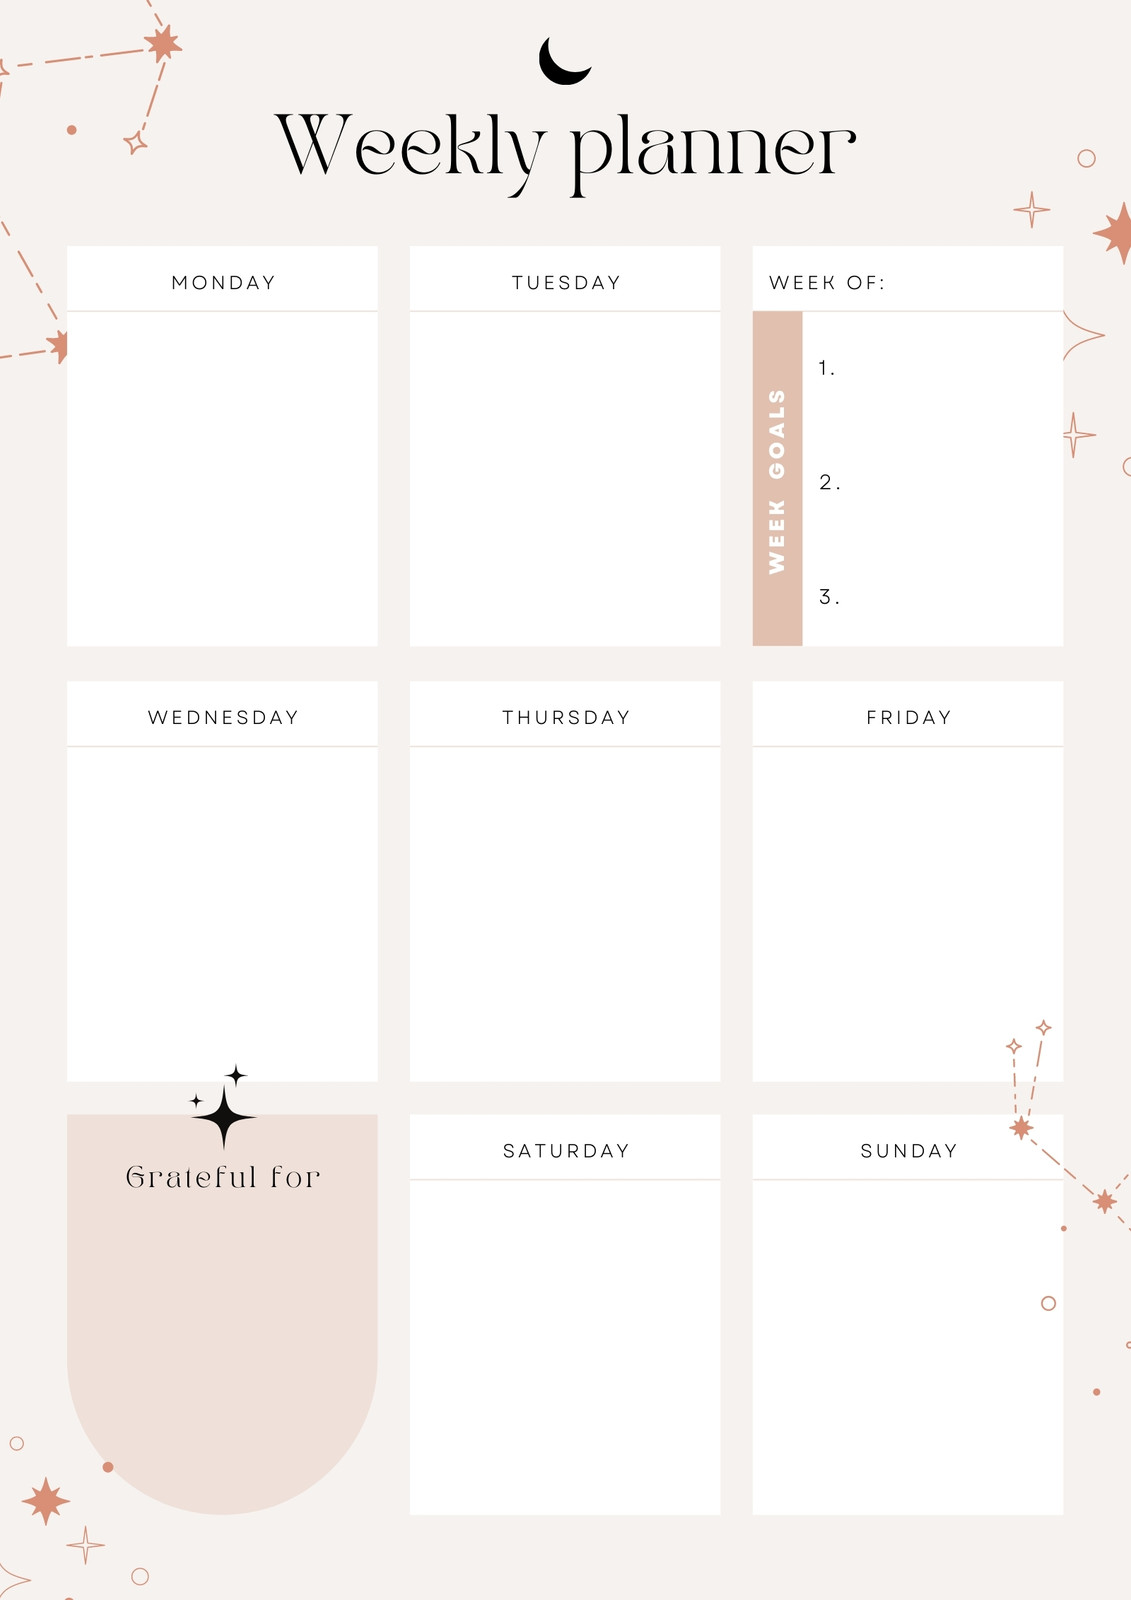 customizable planner templates | Canva